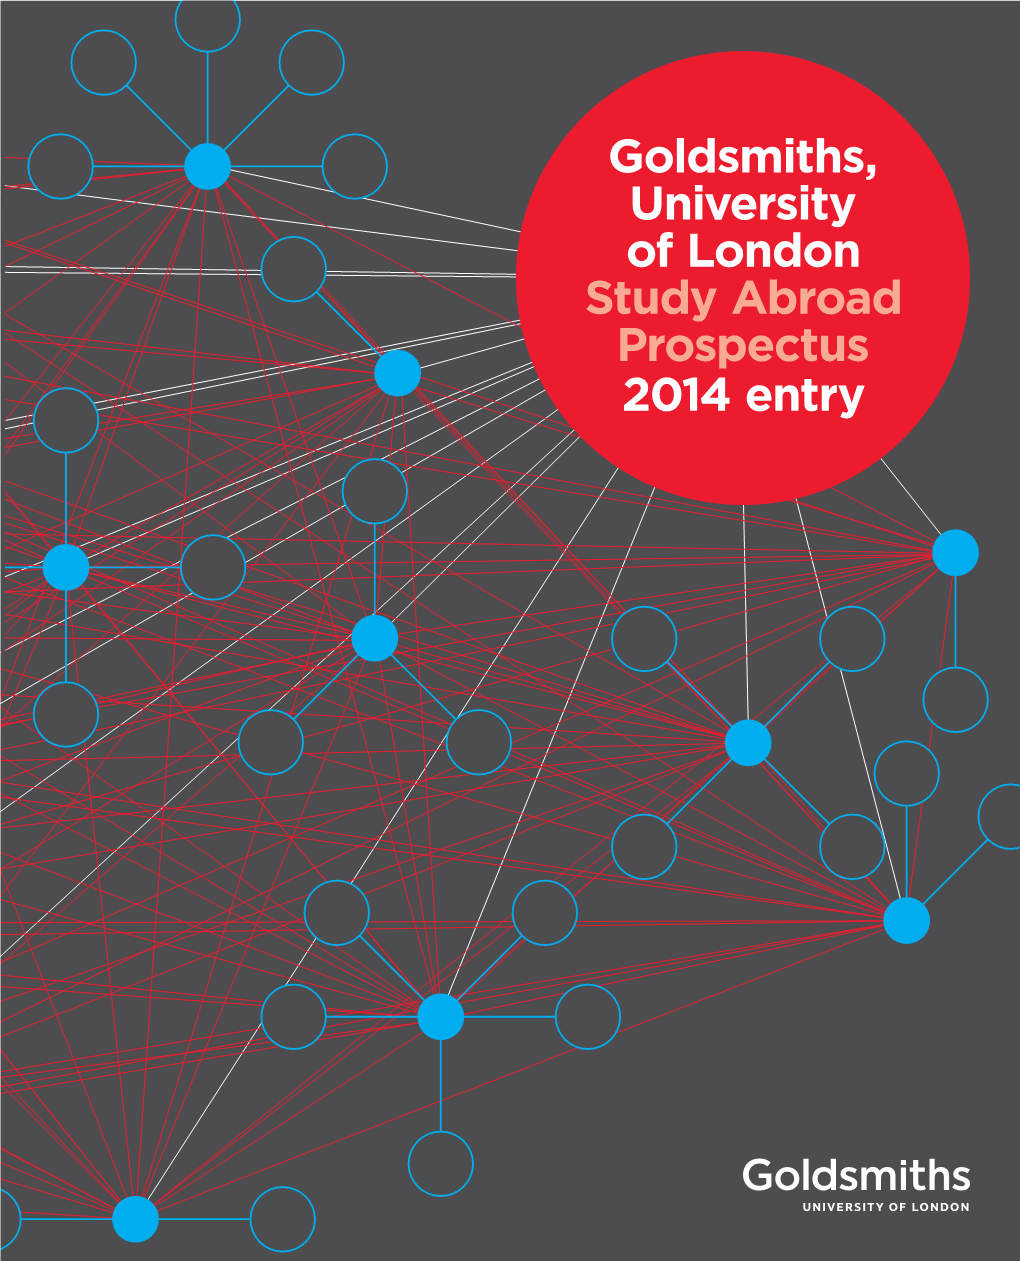 Goldsmiths, University of London Study Abroad Prospectus 2014 Entry 2014 Prospectus Abroad Study London of University Goldsmiths, G56GOLD